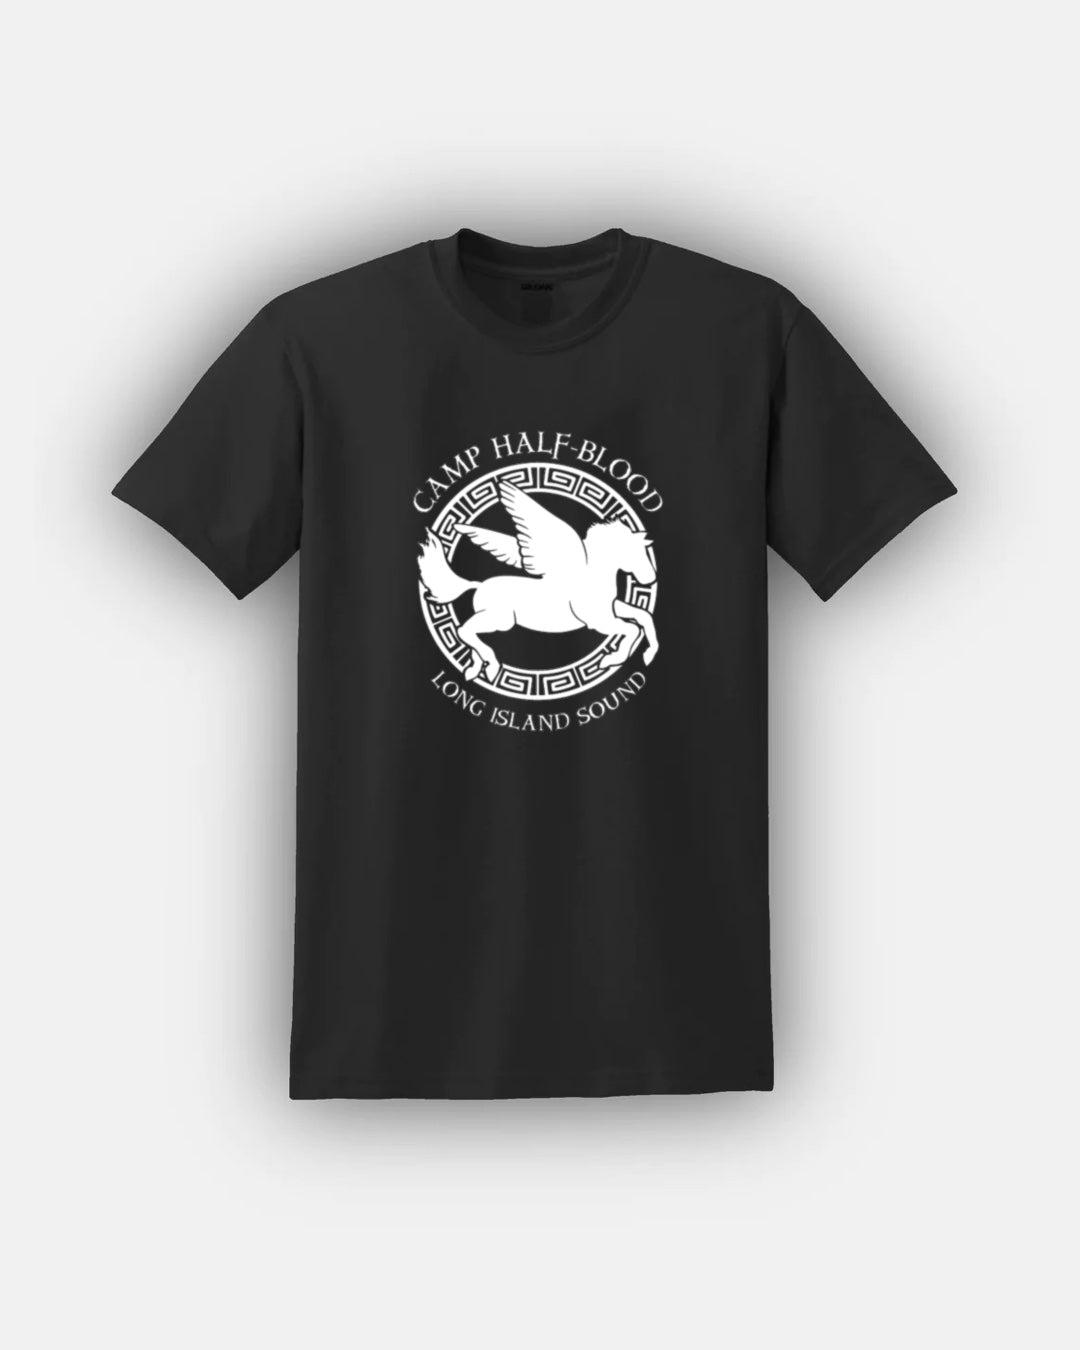 Camp Half-Blood Shirt, Custom prints store